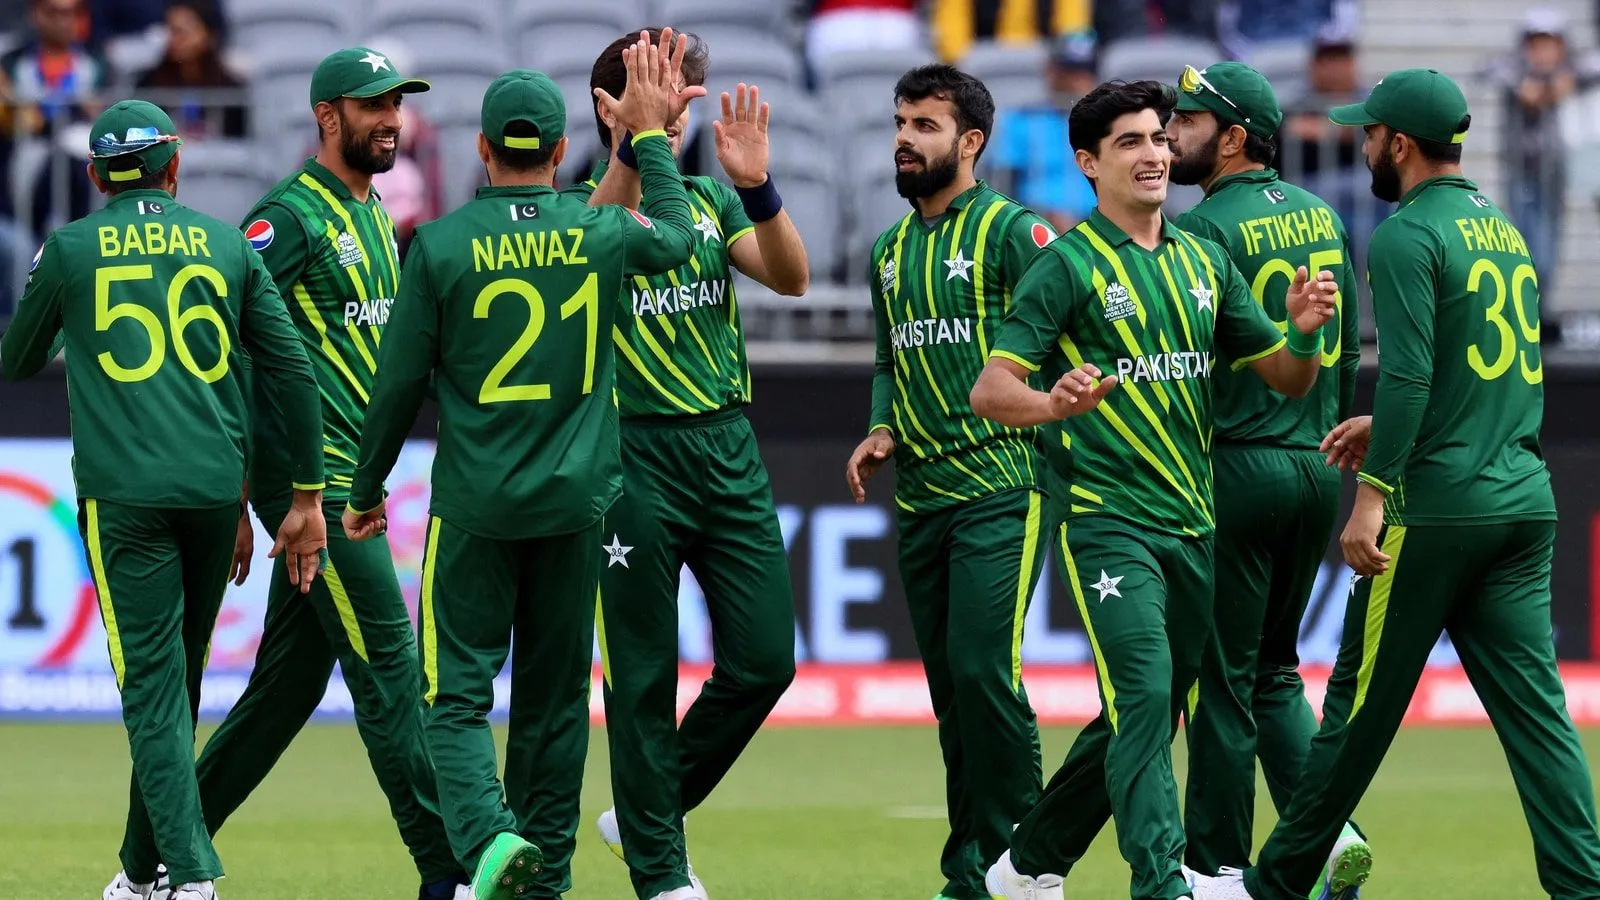 Pakistan's first Test aspirations dwindle as Australia leads large